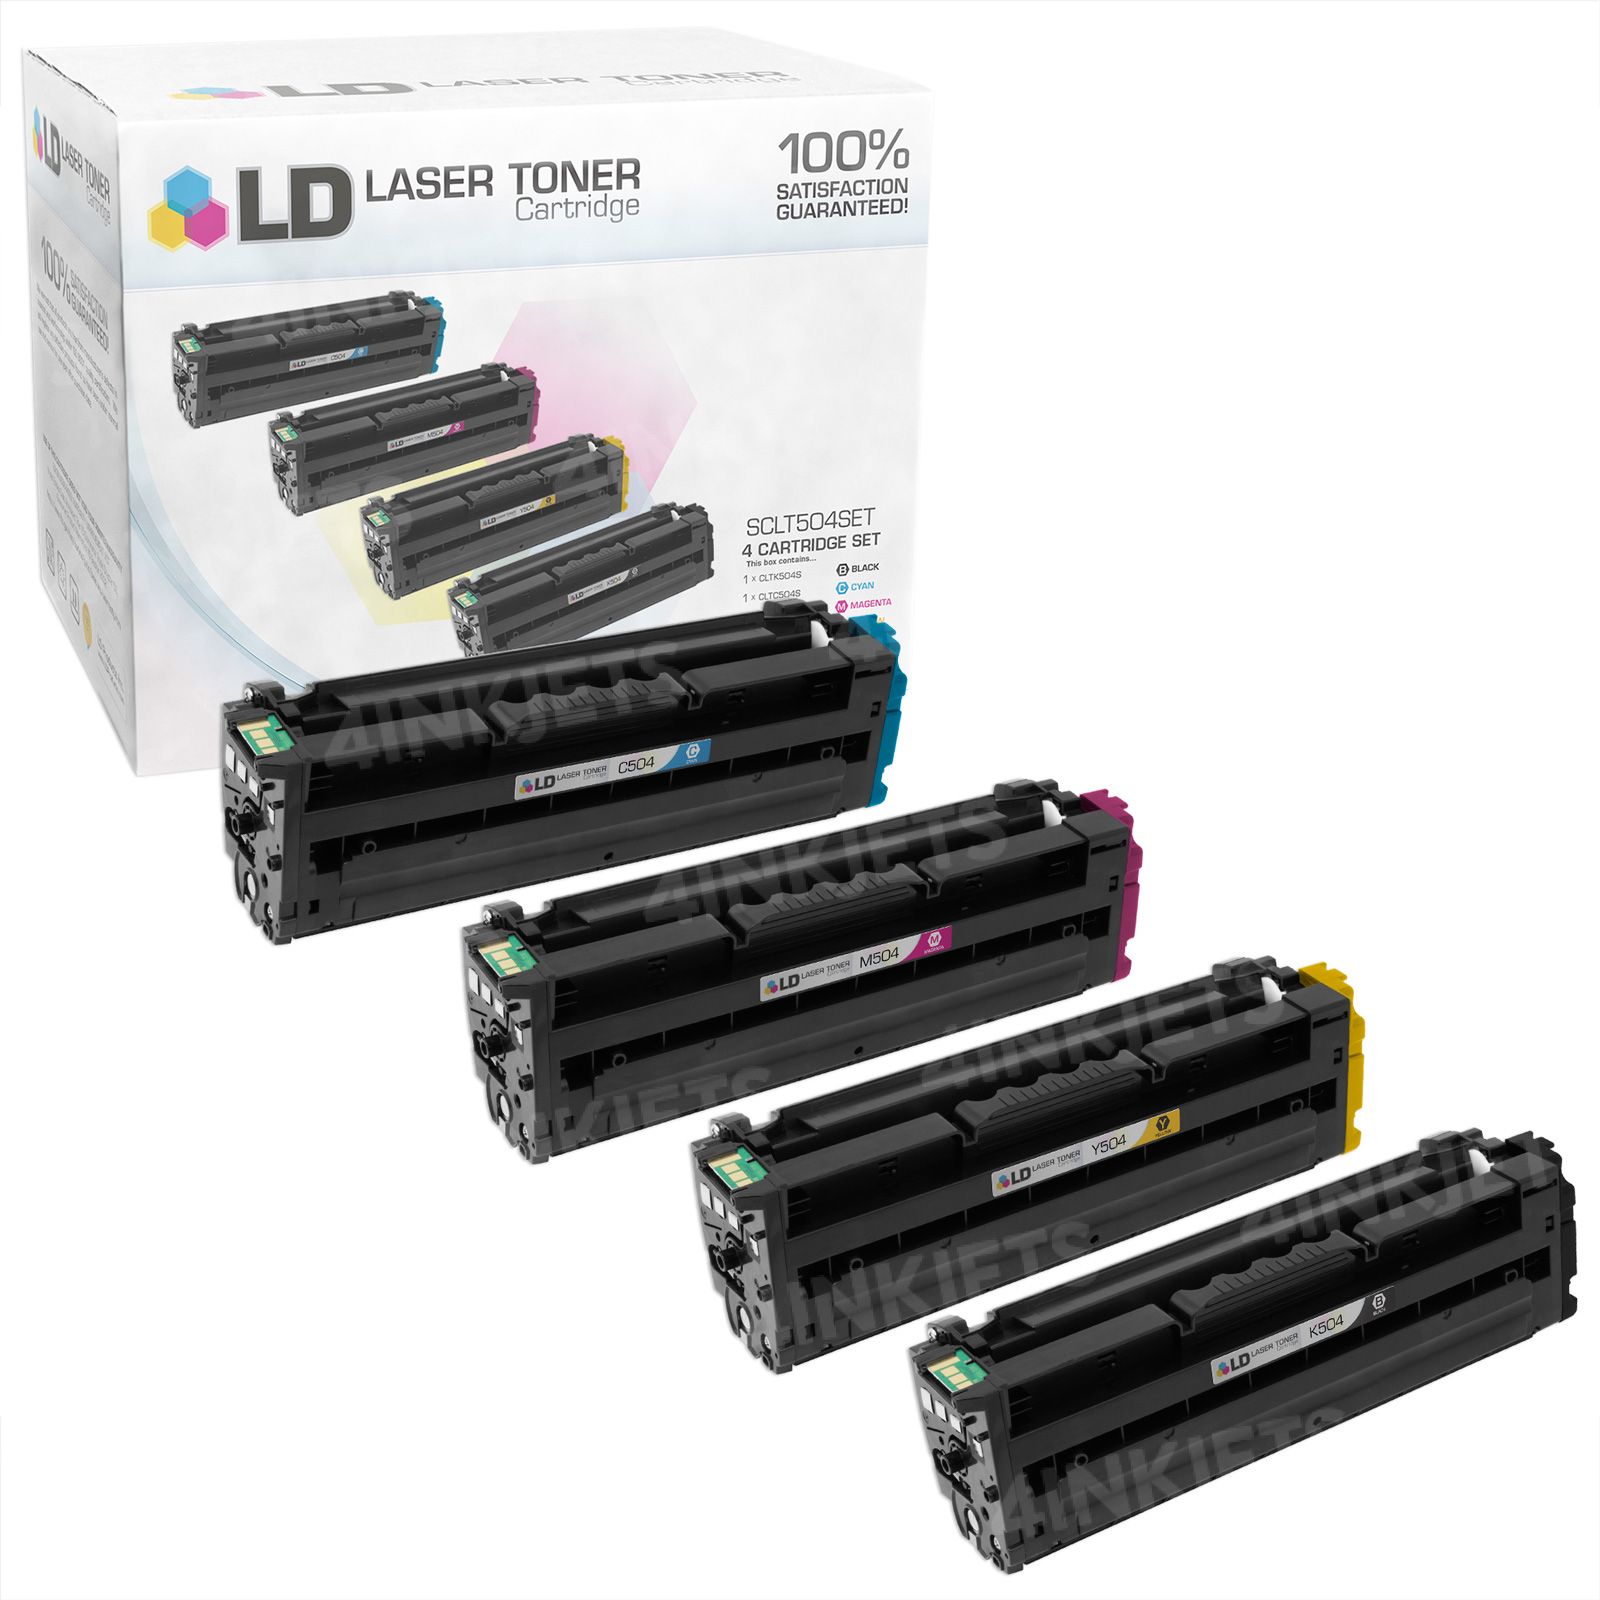 LD Clear Mini Office Supply Kit - 4inkjets